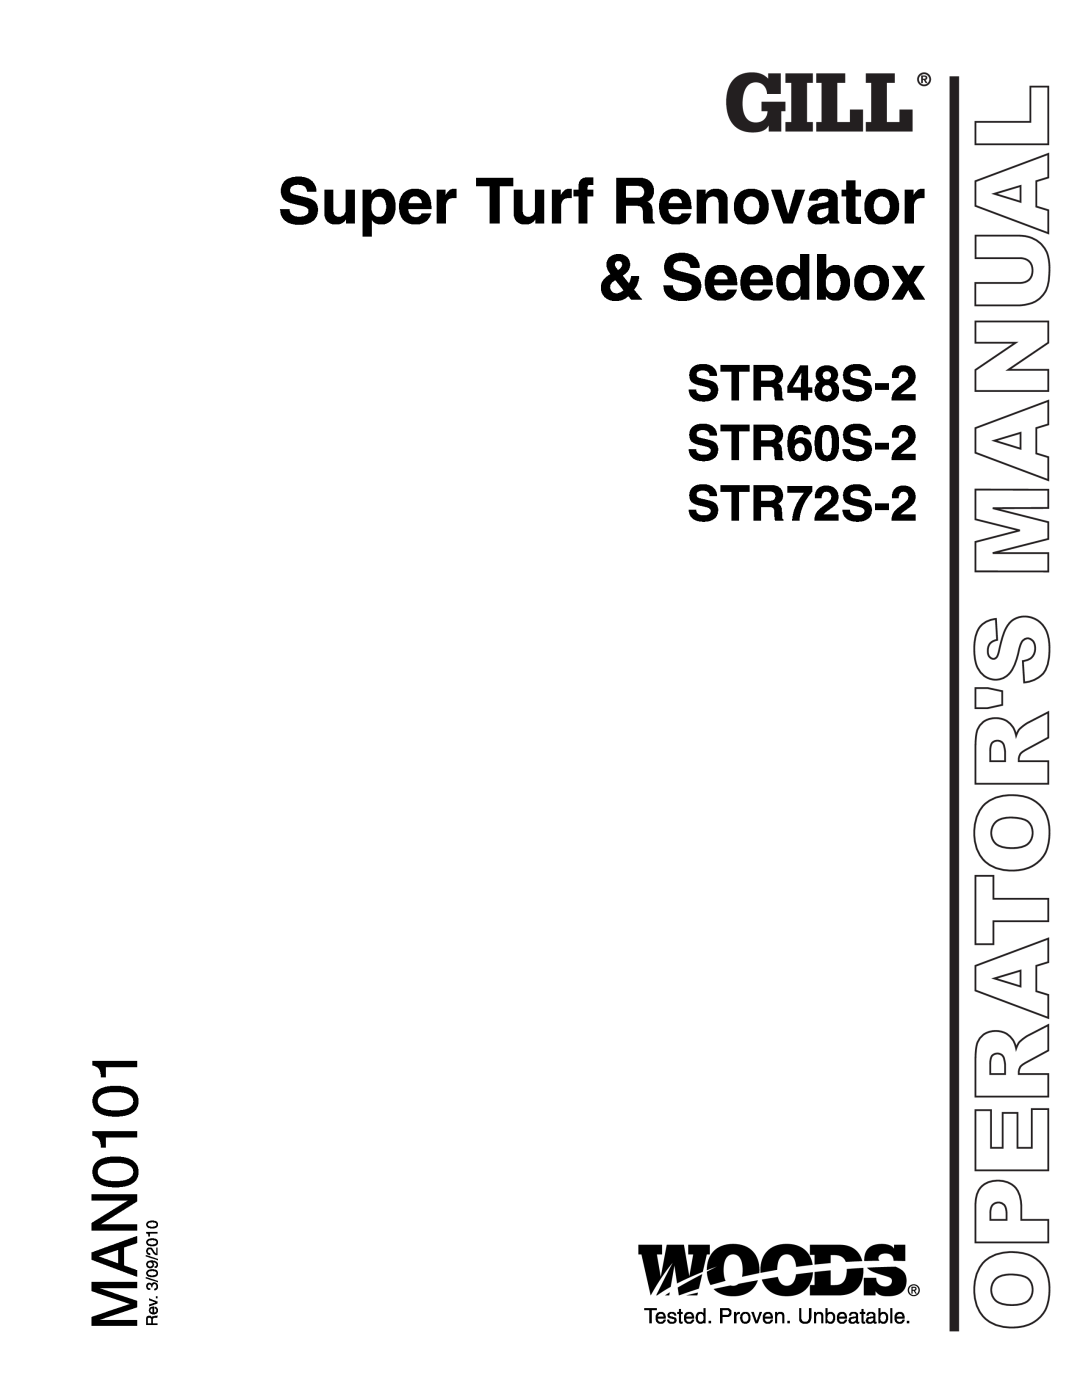 Woods Equipment manual Super Turf Renovator & Seedbox, STR48S-2 STR60S-2 STR72S-2, Tested. Proven. Unbeatable, MAN0101 